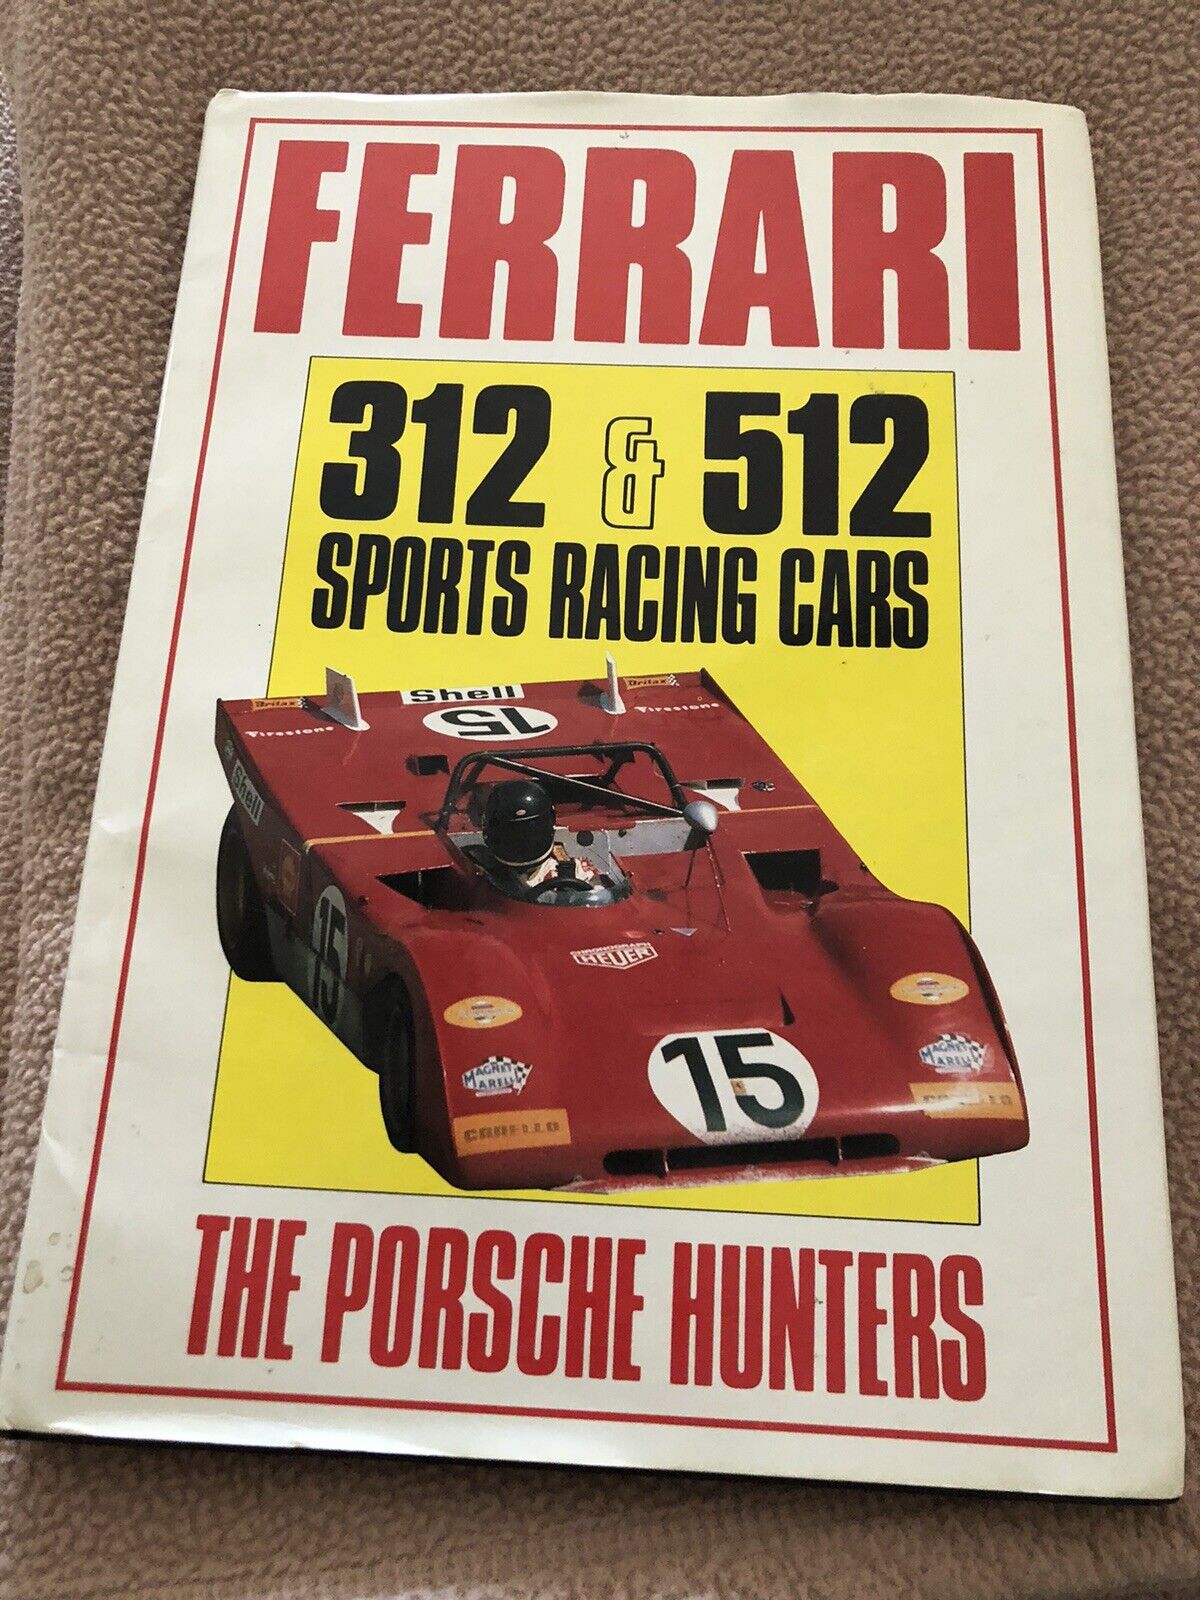 Book Ferrari 312 & 512 Sports Racing Cars The Porsche Hunters by Bamsey 1986